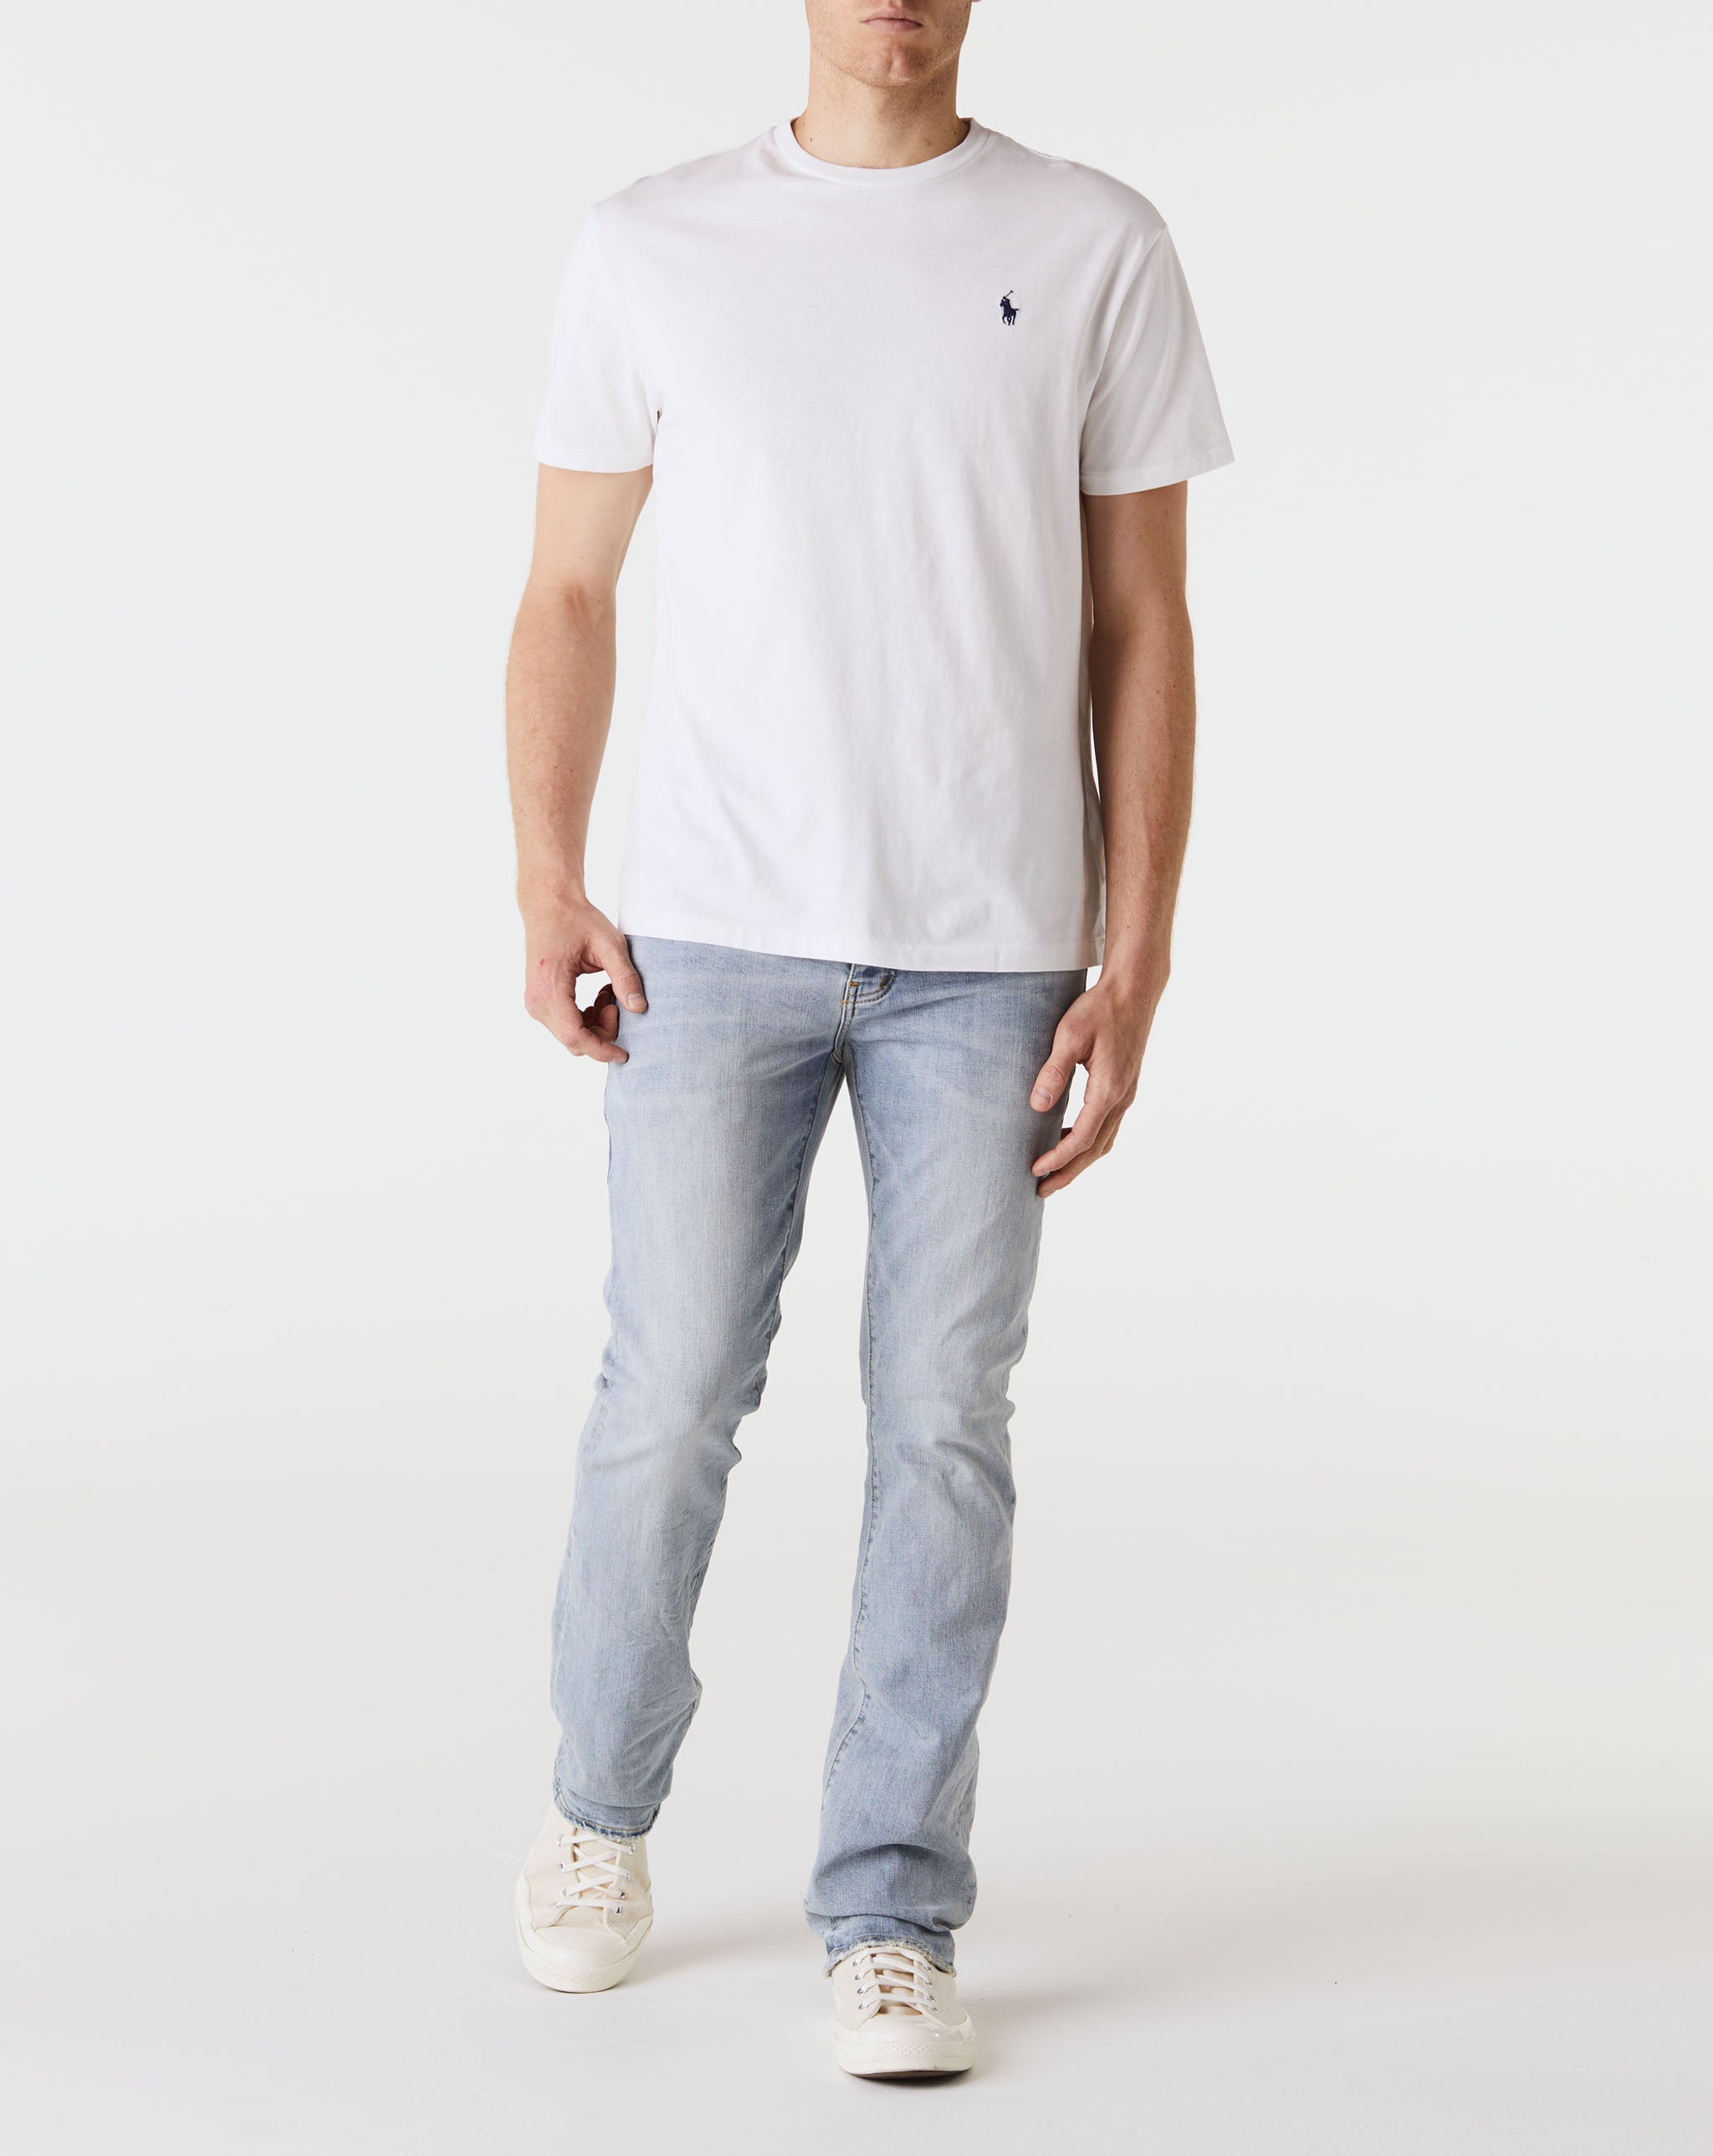 Polo Ralph Lauren Classic Fit T-Shirt - Rule of Next Apparel